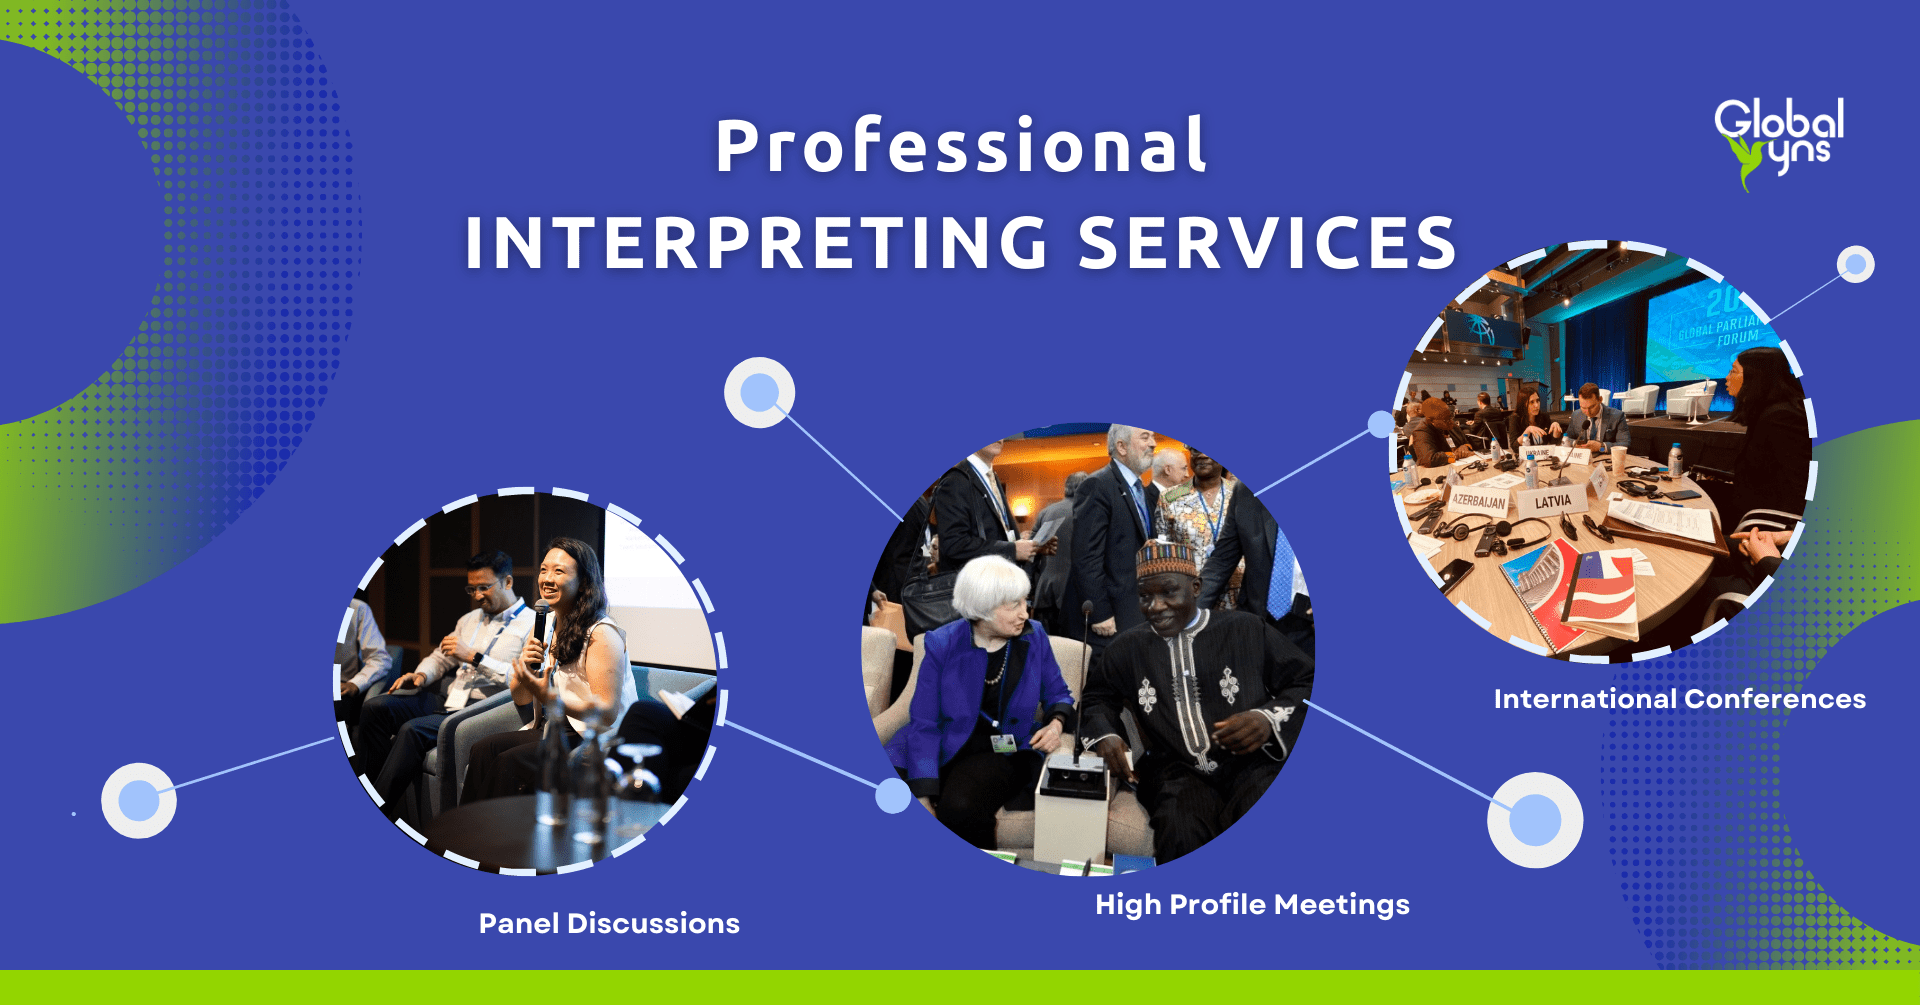 Grow Your Network Through Professional Interpretation Services